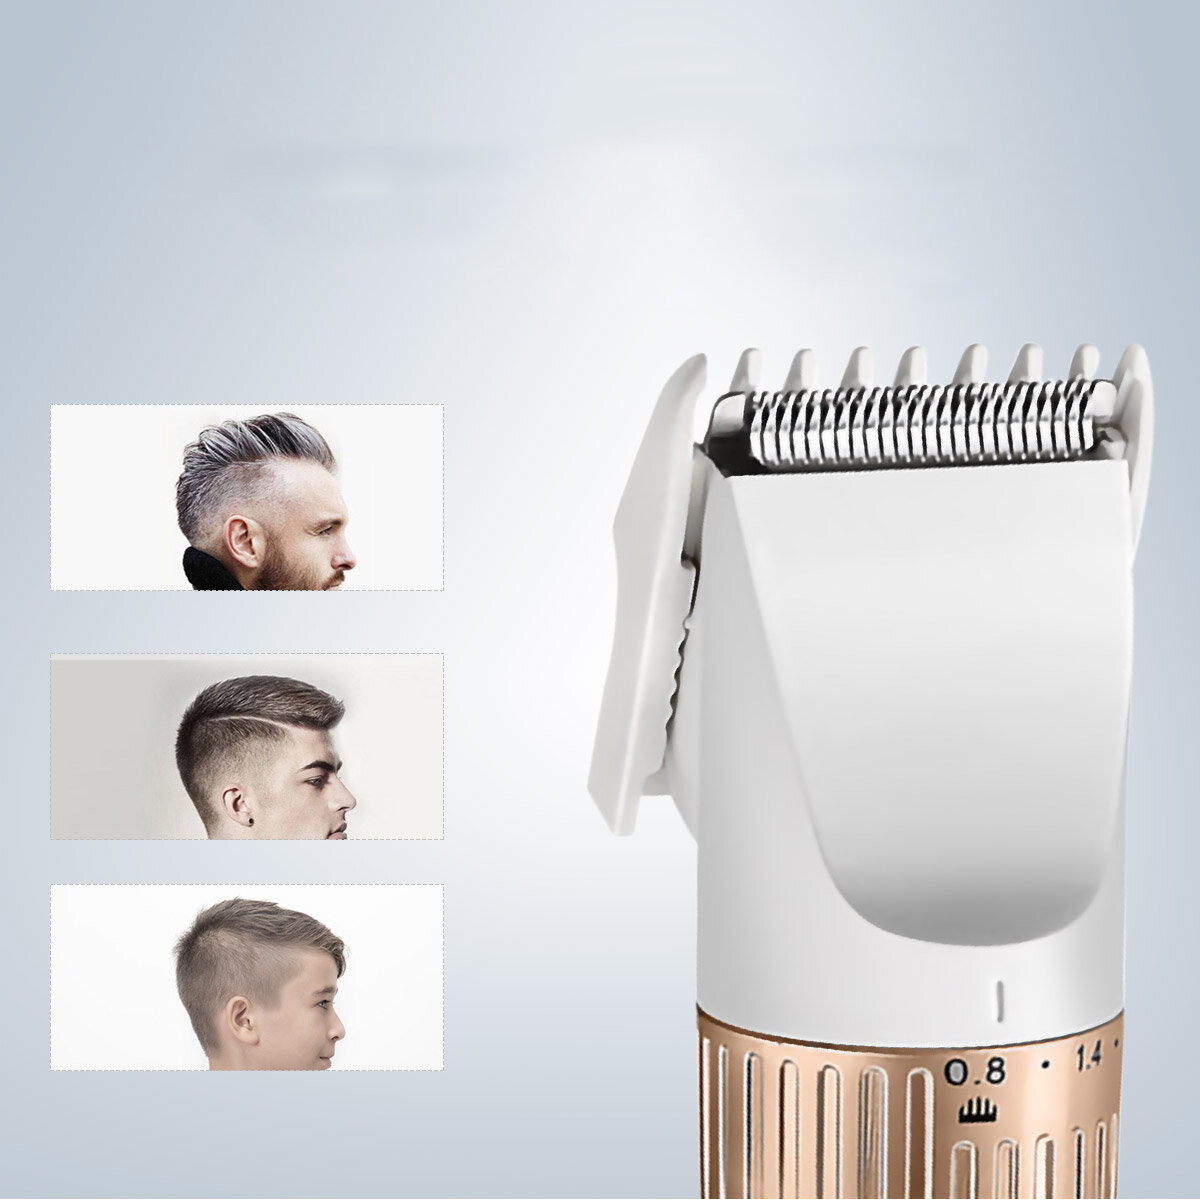 

KEMEI Men Electric Beard Волосы Триммер Clipper Перезаряжаемая нержавеющая пластина Бритва Батарея Волосы Автомат для ре